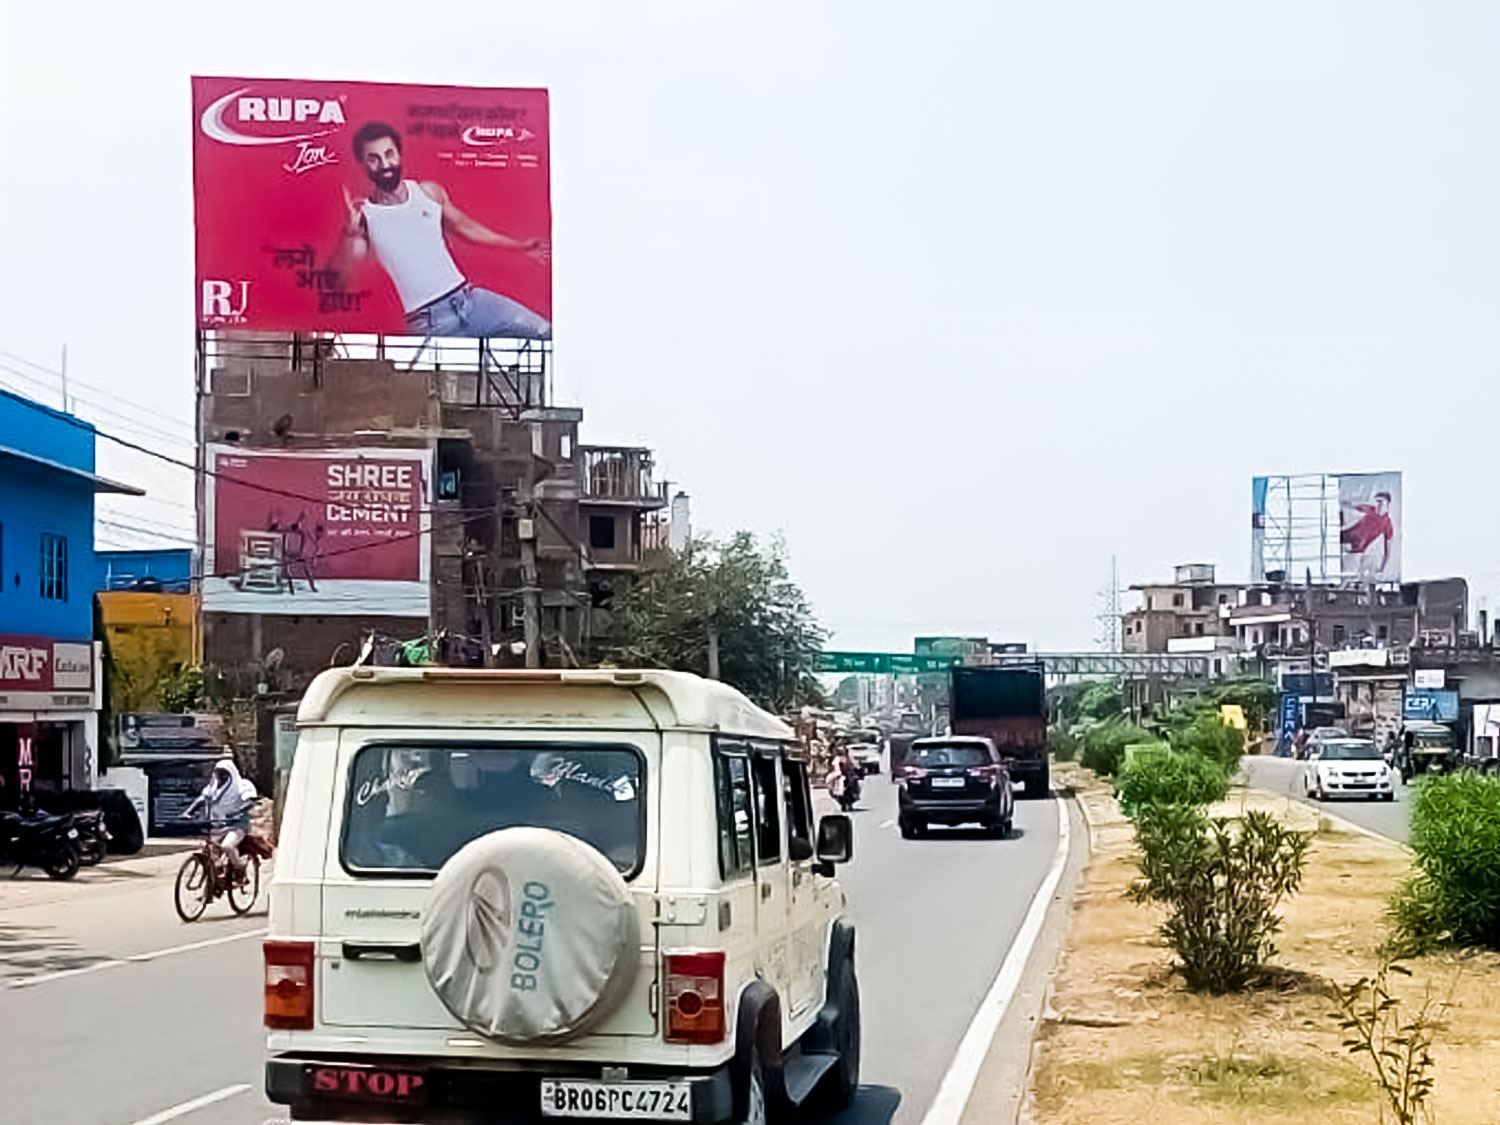 Rupa campaign Billboard